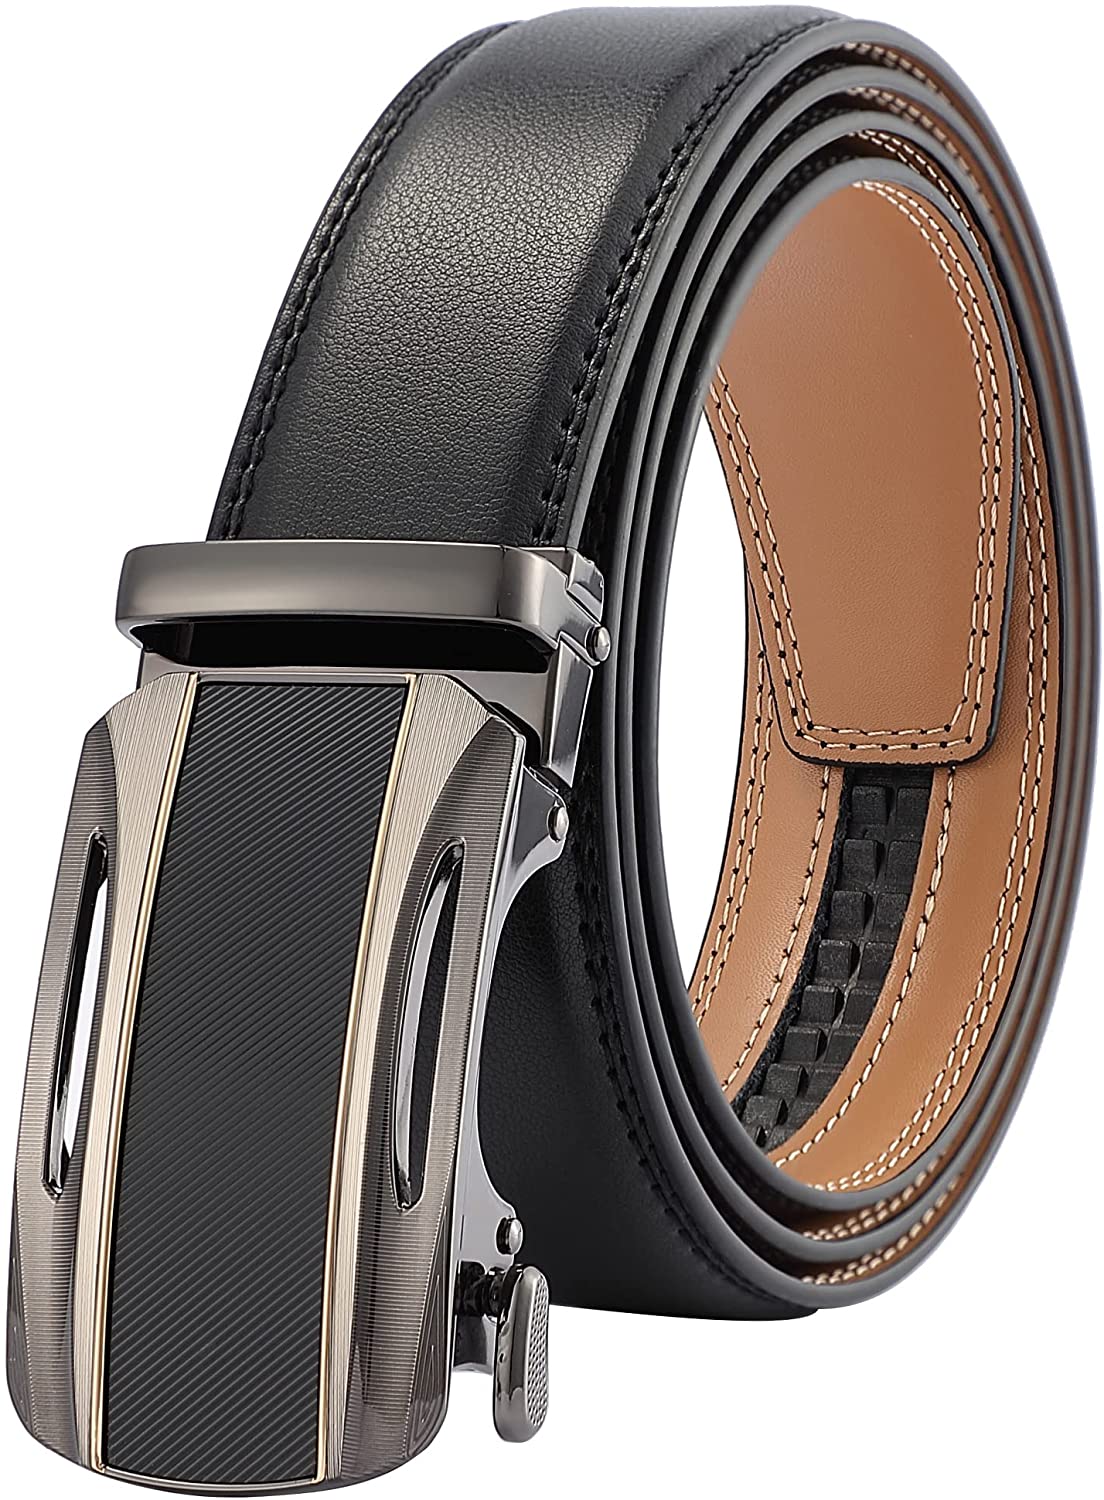 Adjustable Dress Belt for Men CLUBBELTS Men's Leather Ratchet Belt with Automatic Buckle 1 3/8 Wide Black/White/Brown 